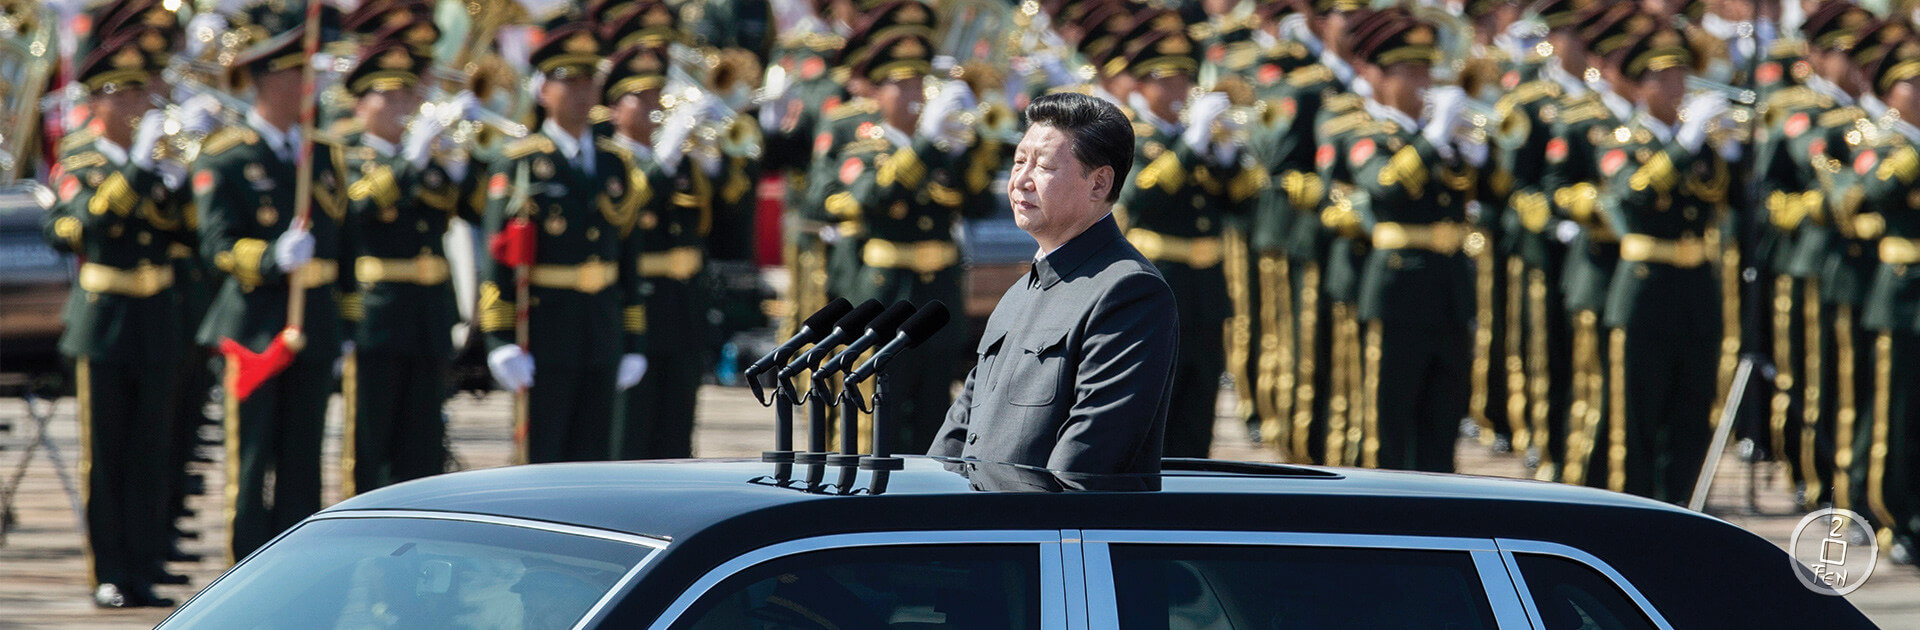 Imagining Xi Jinping’s “State of the (Chinese) Union” Address